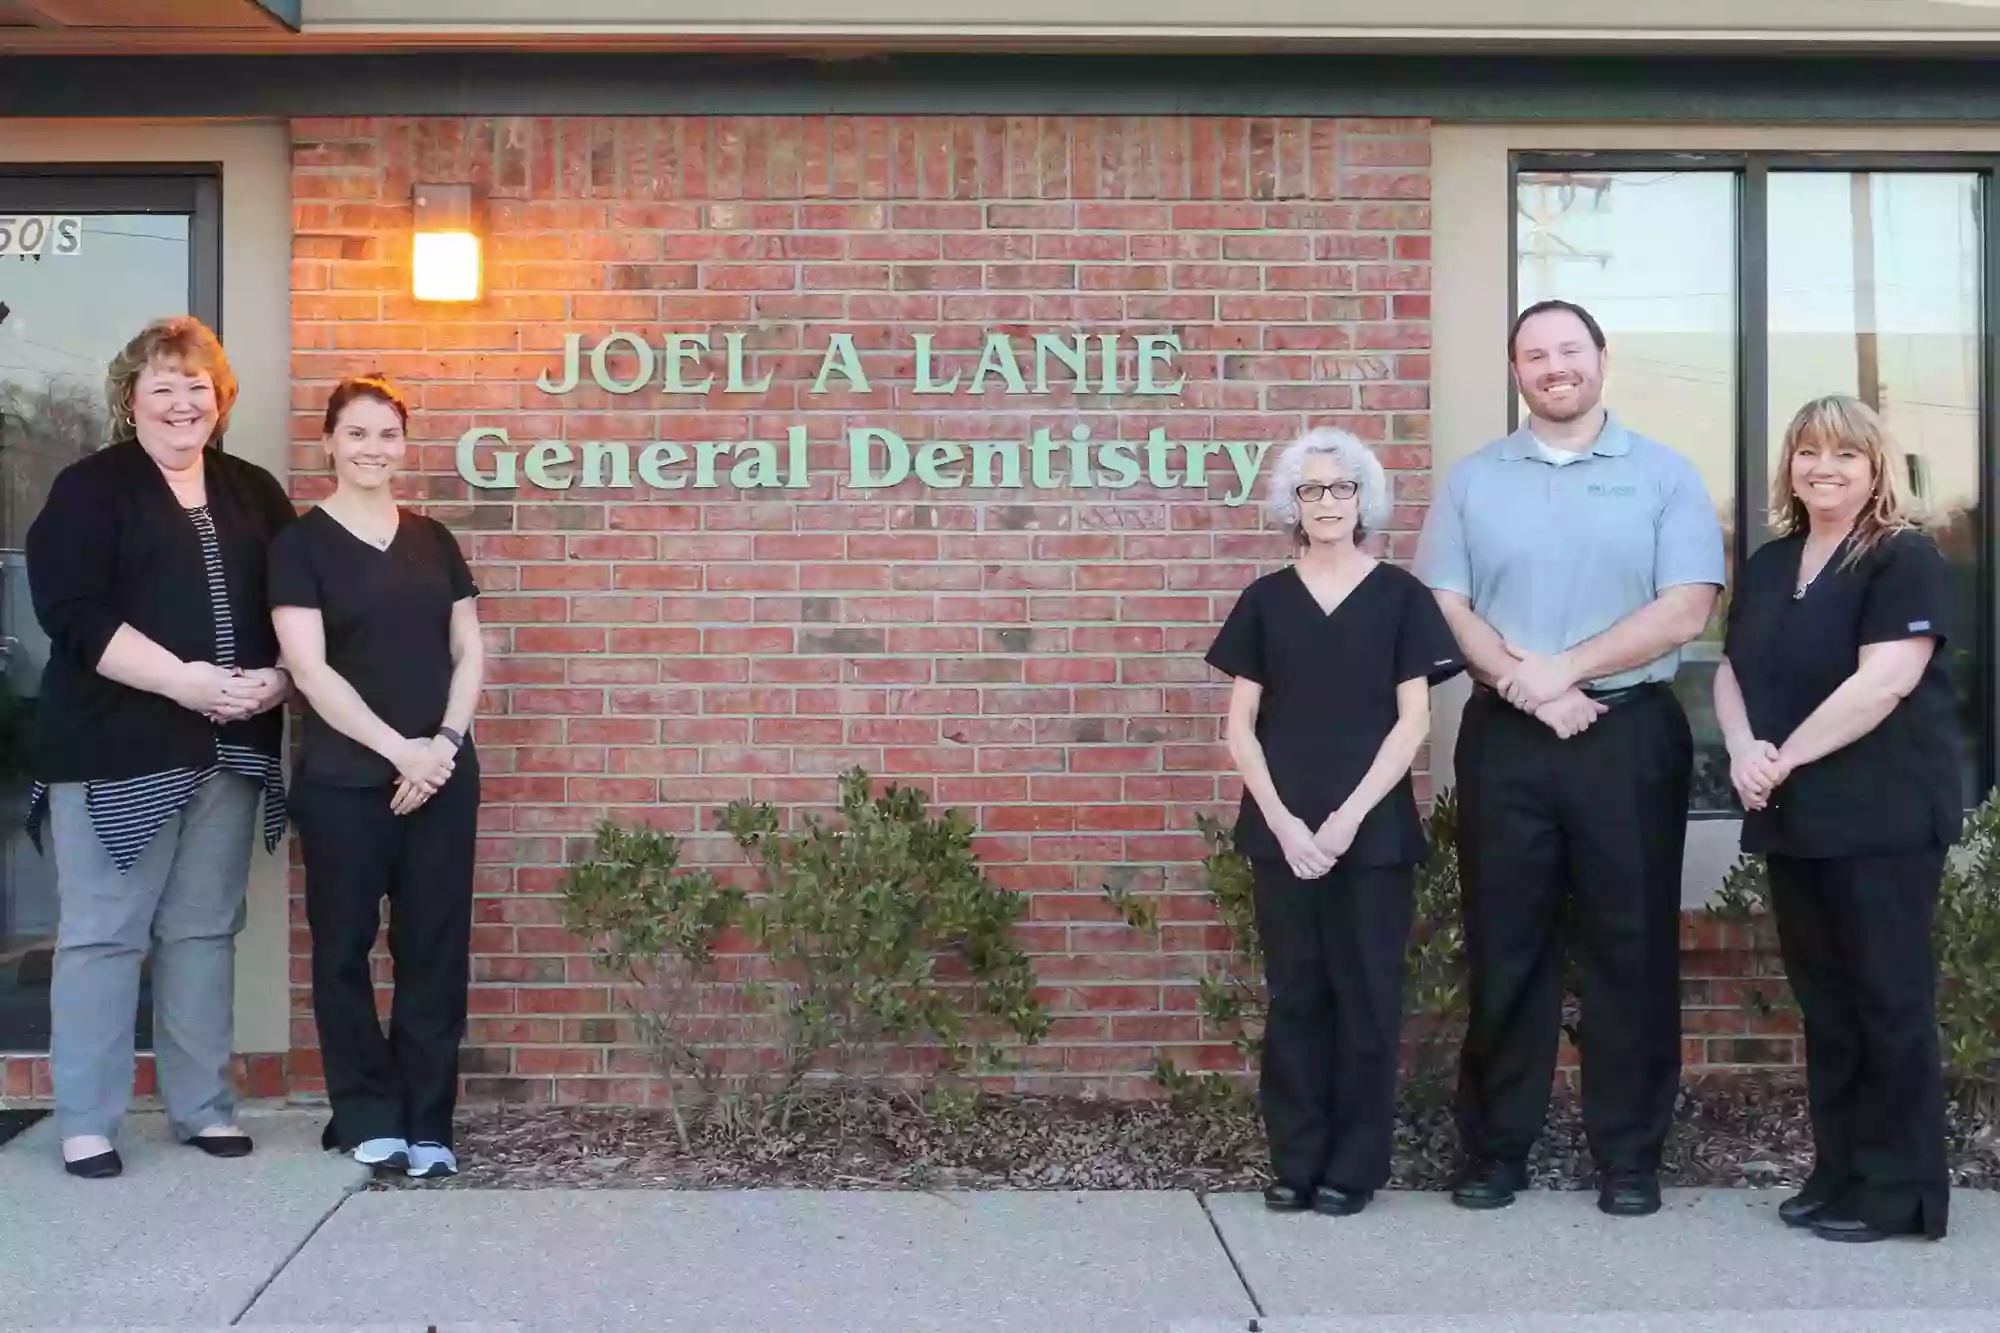 Lanie Family Dentistry: Joel A. Lanie, DDS